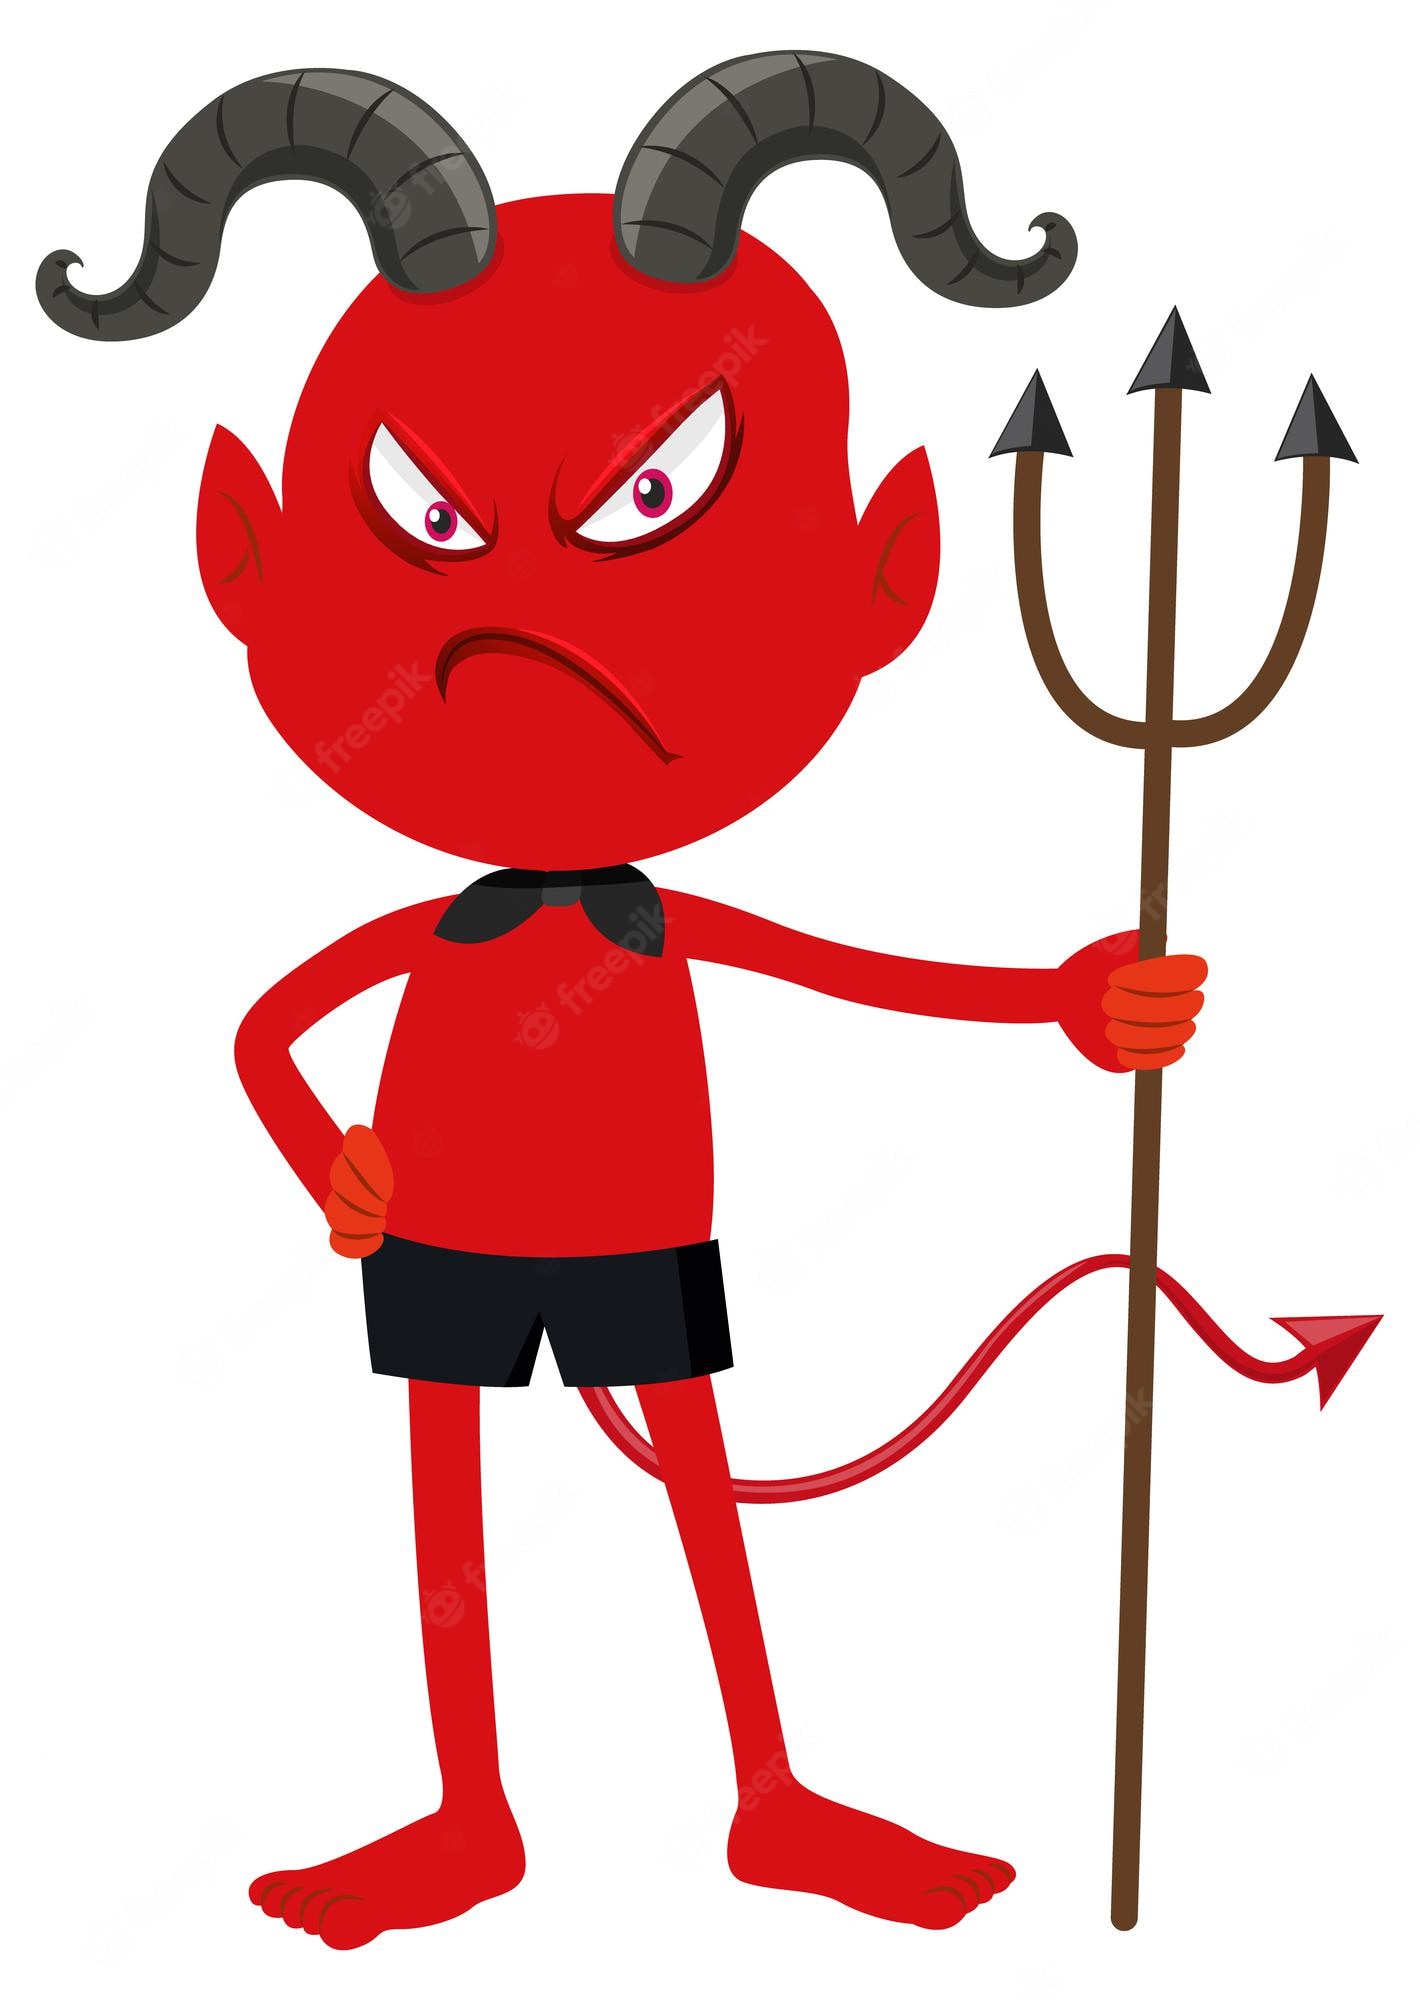 Red Devil cartoon